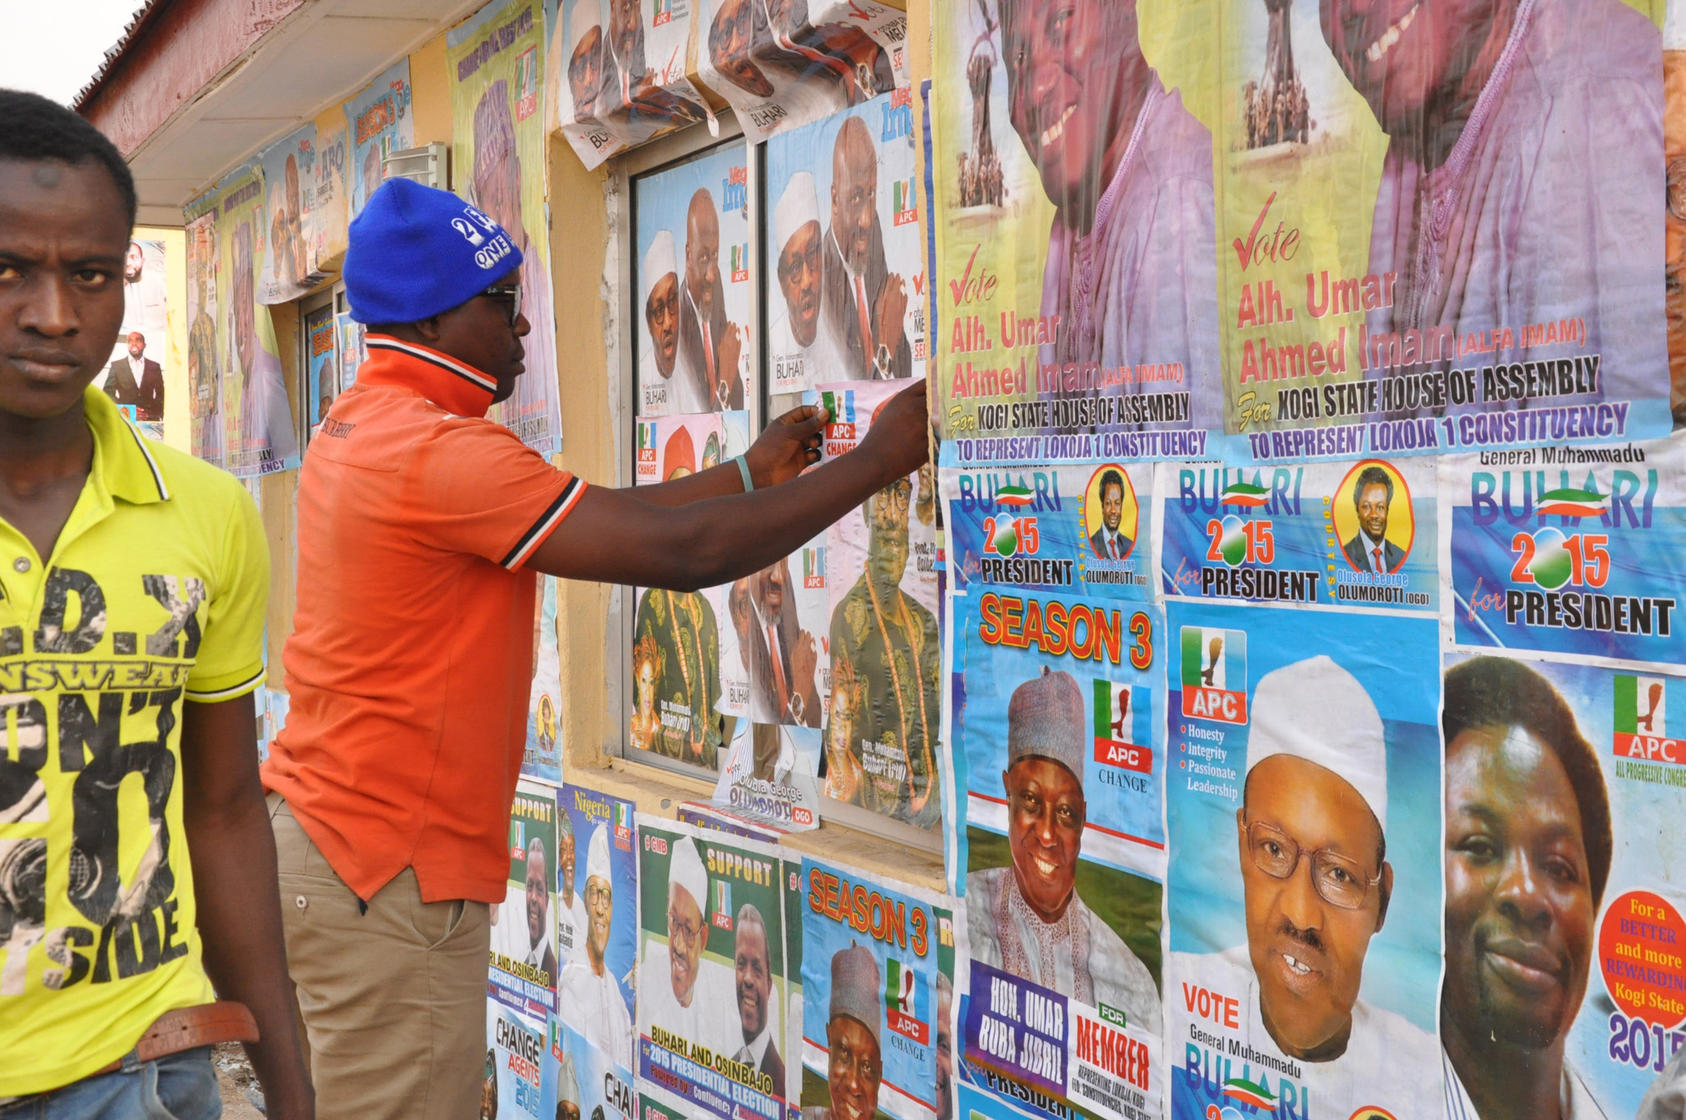 20150202-Election-in-Nigeria-2015-Stiftung-Flickr-PC.jpg